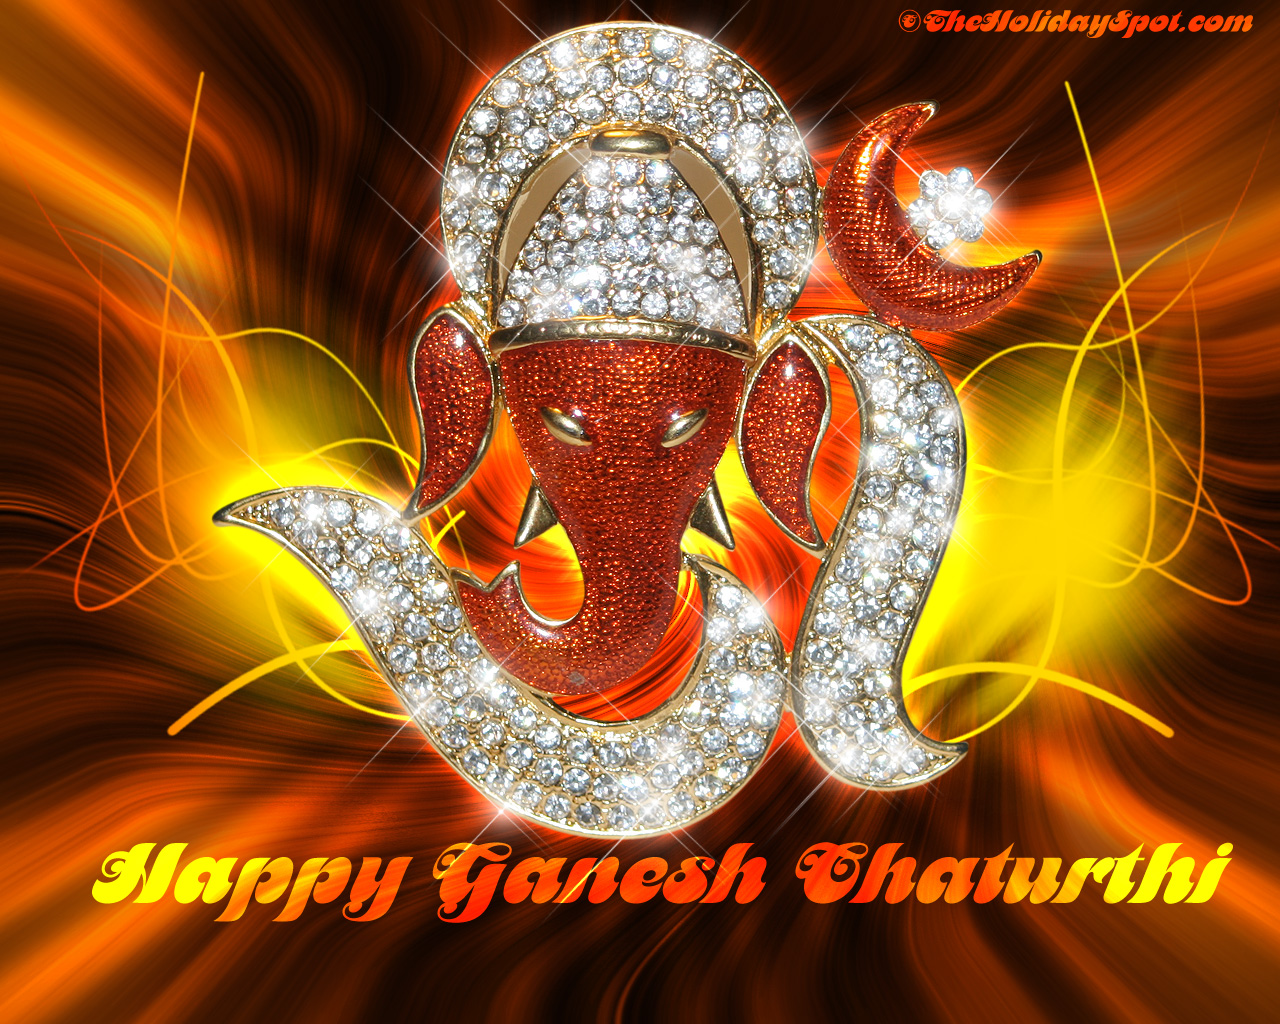 Lord Ganesha Wallpaper - Ganesh Chaturthi Images Free Download - HD Wallpaper 